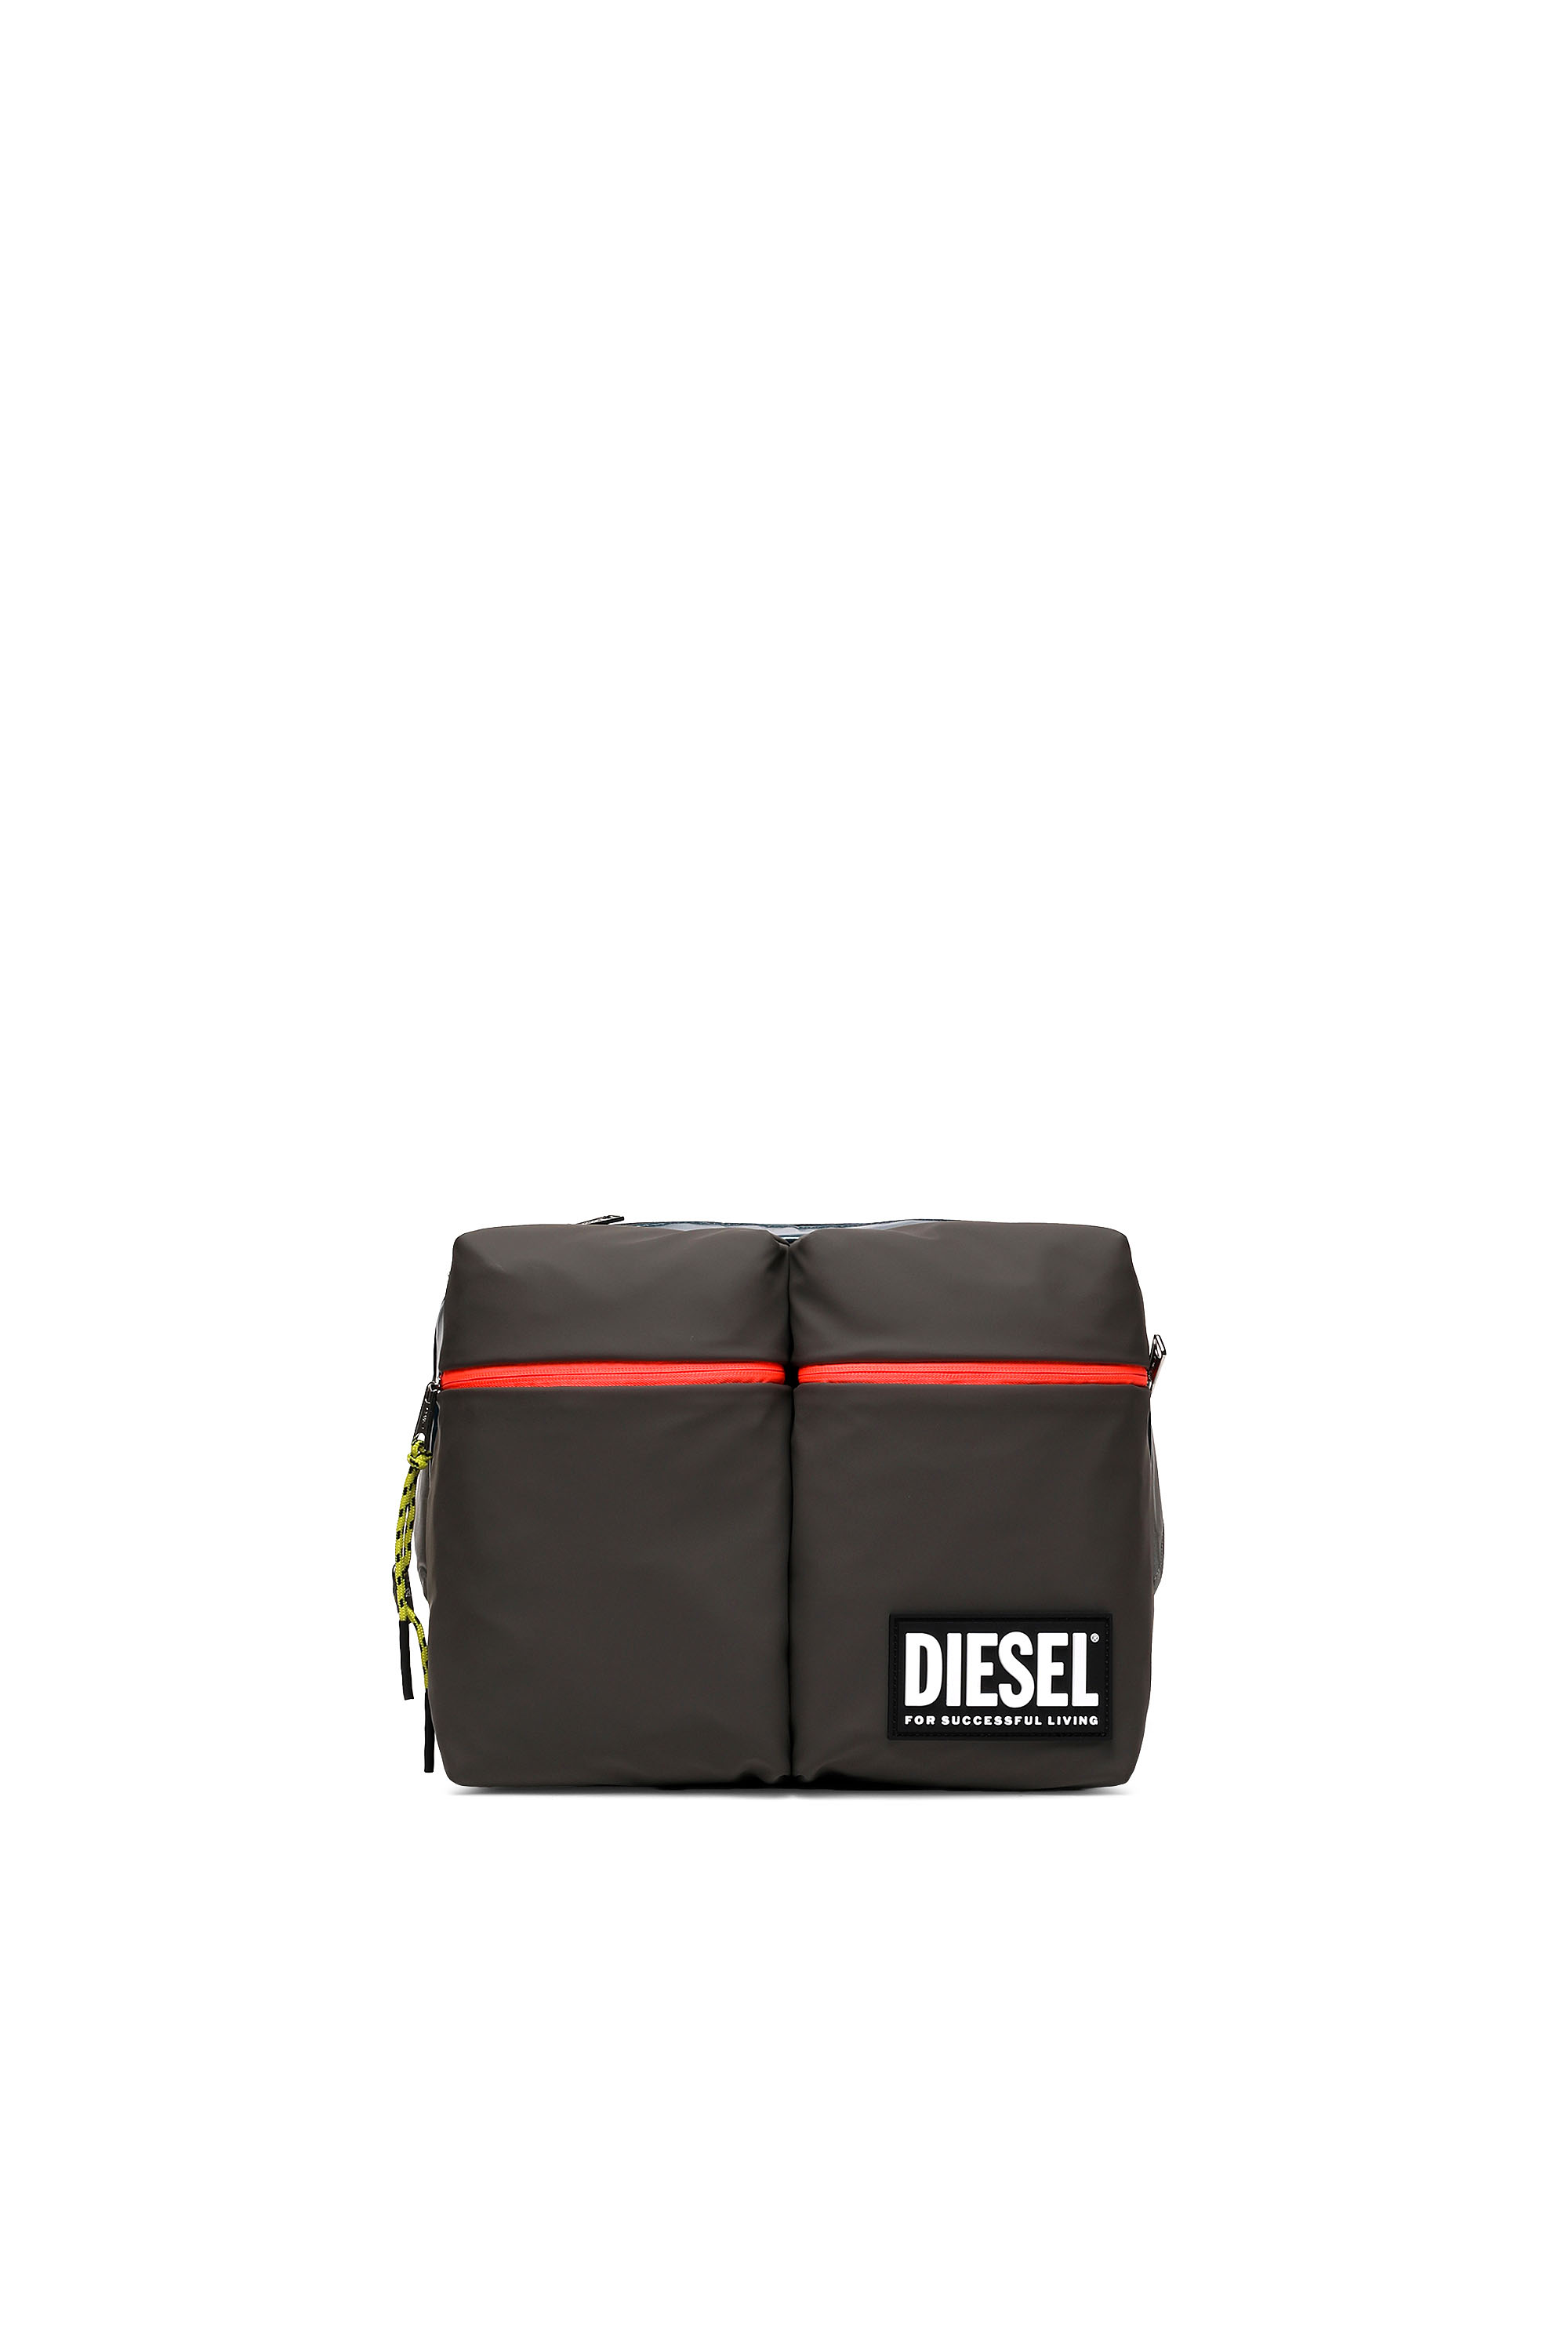 Diesel - CROSYO, Polychrome/Noir - Image 1